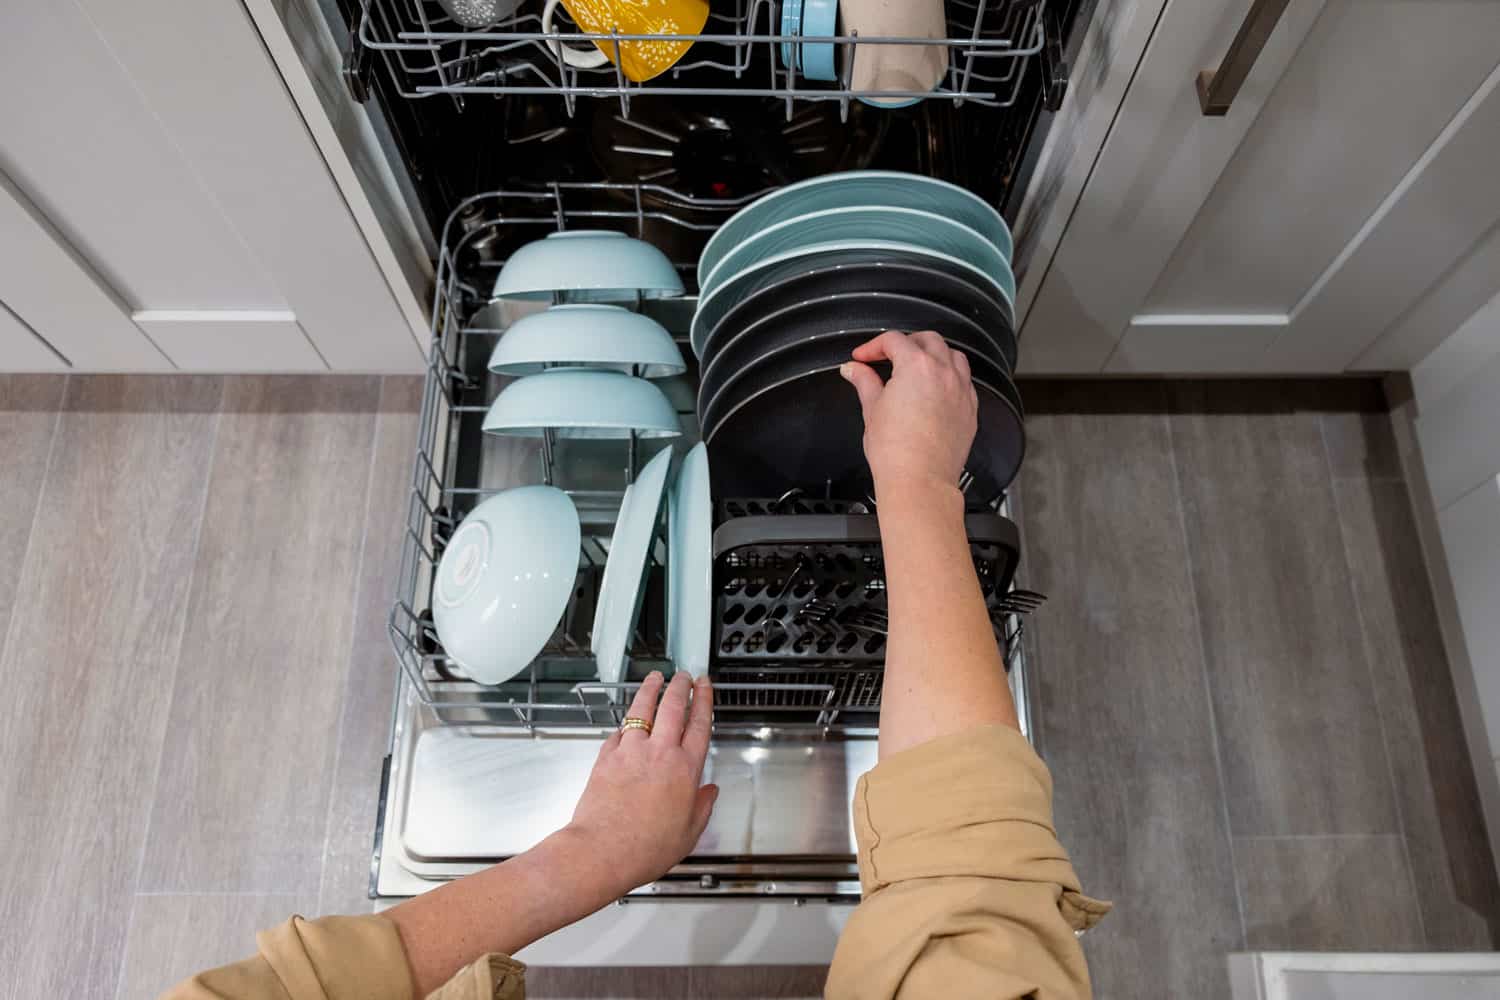 Properly manage and arrange dishes in dishwasher